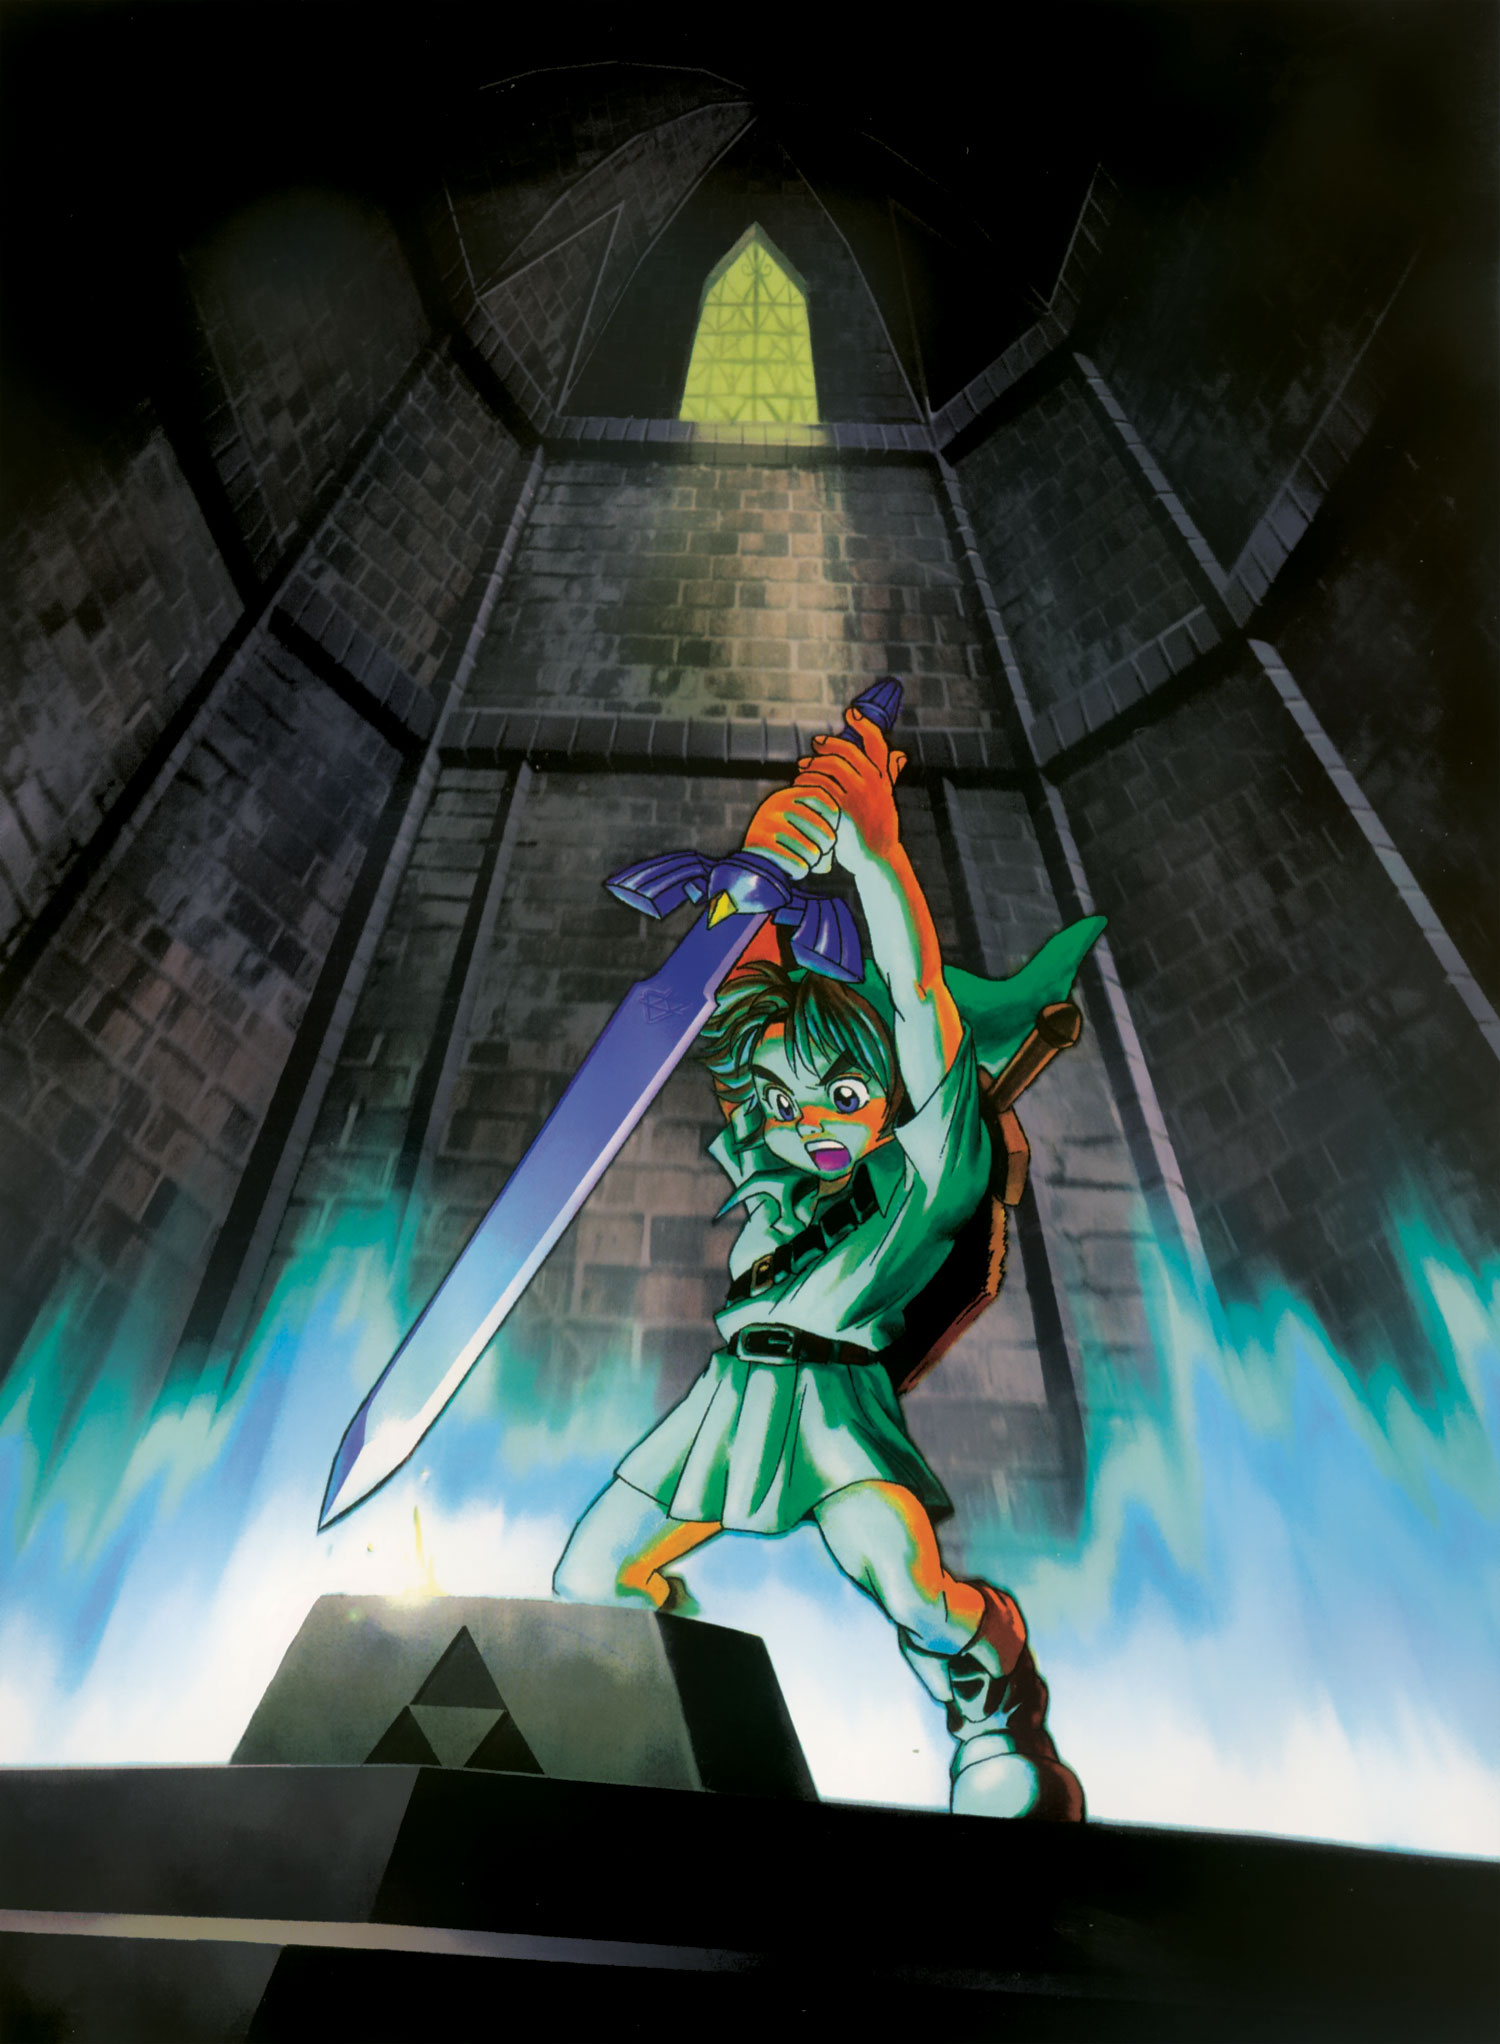 The Legend of Zelda: Ocarina of Time, Zeldapedia